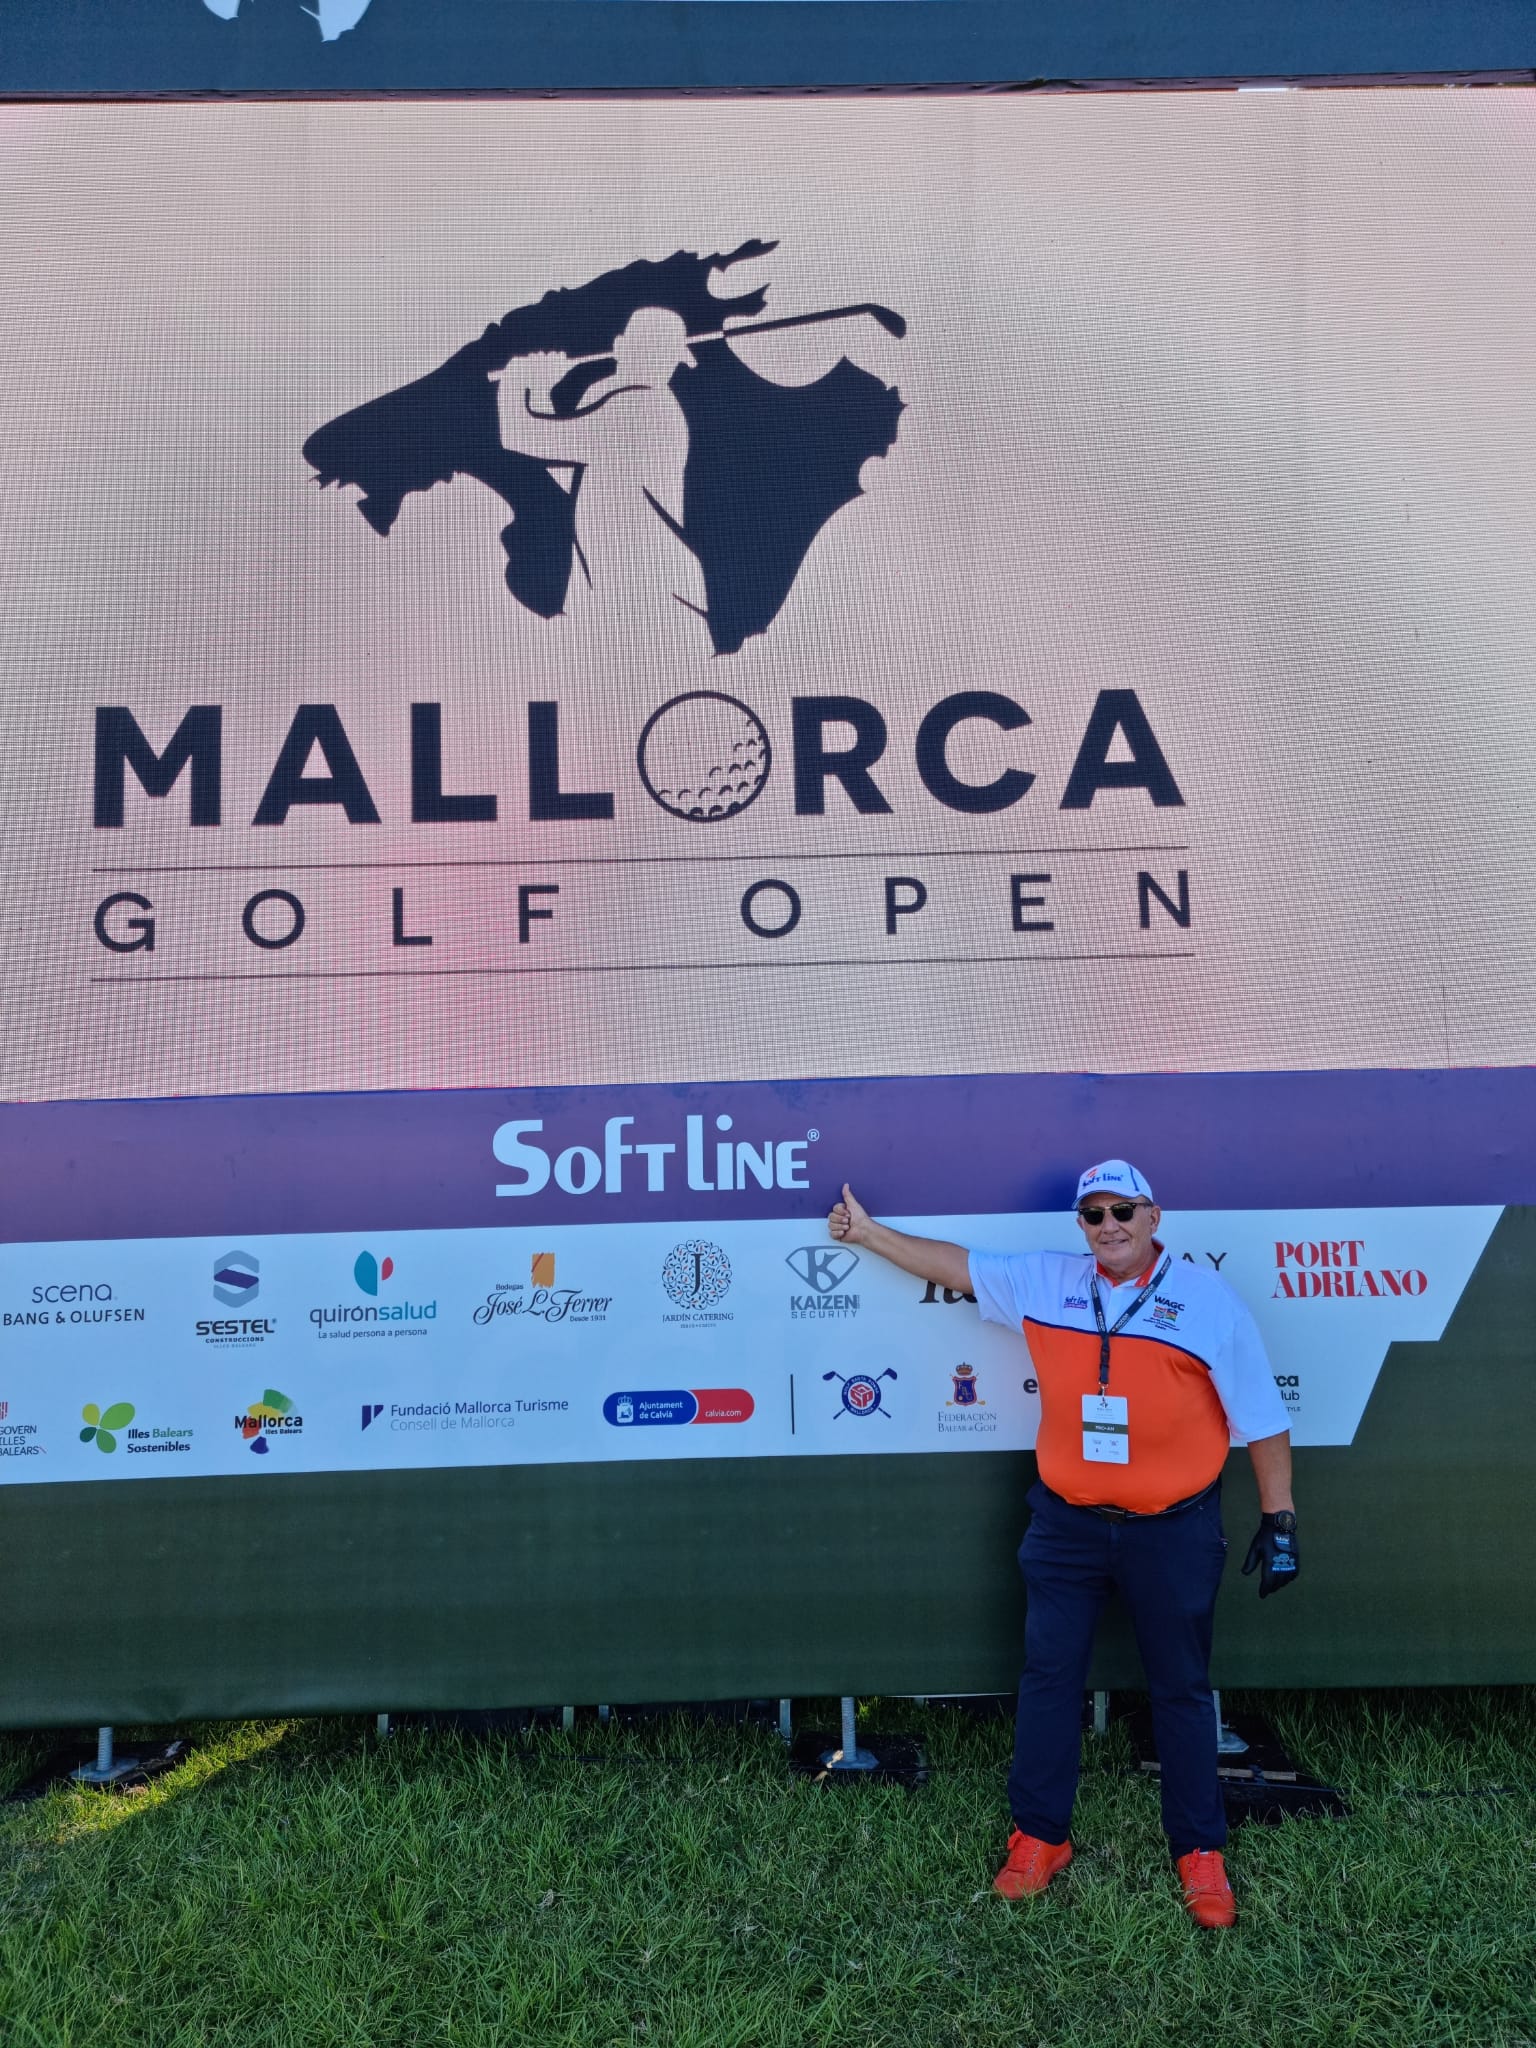 SOFT LINE patrocinador del Mallorca Golf Open 2021